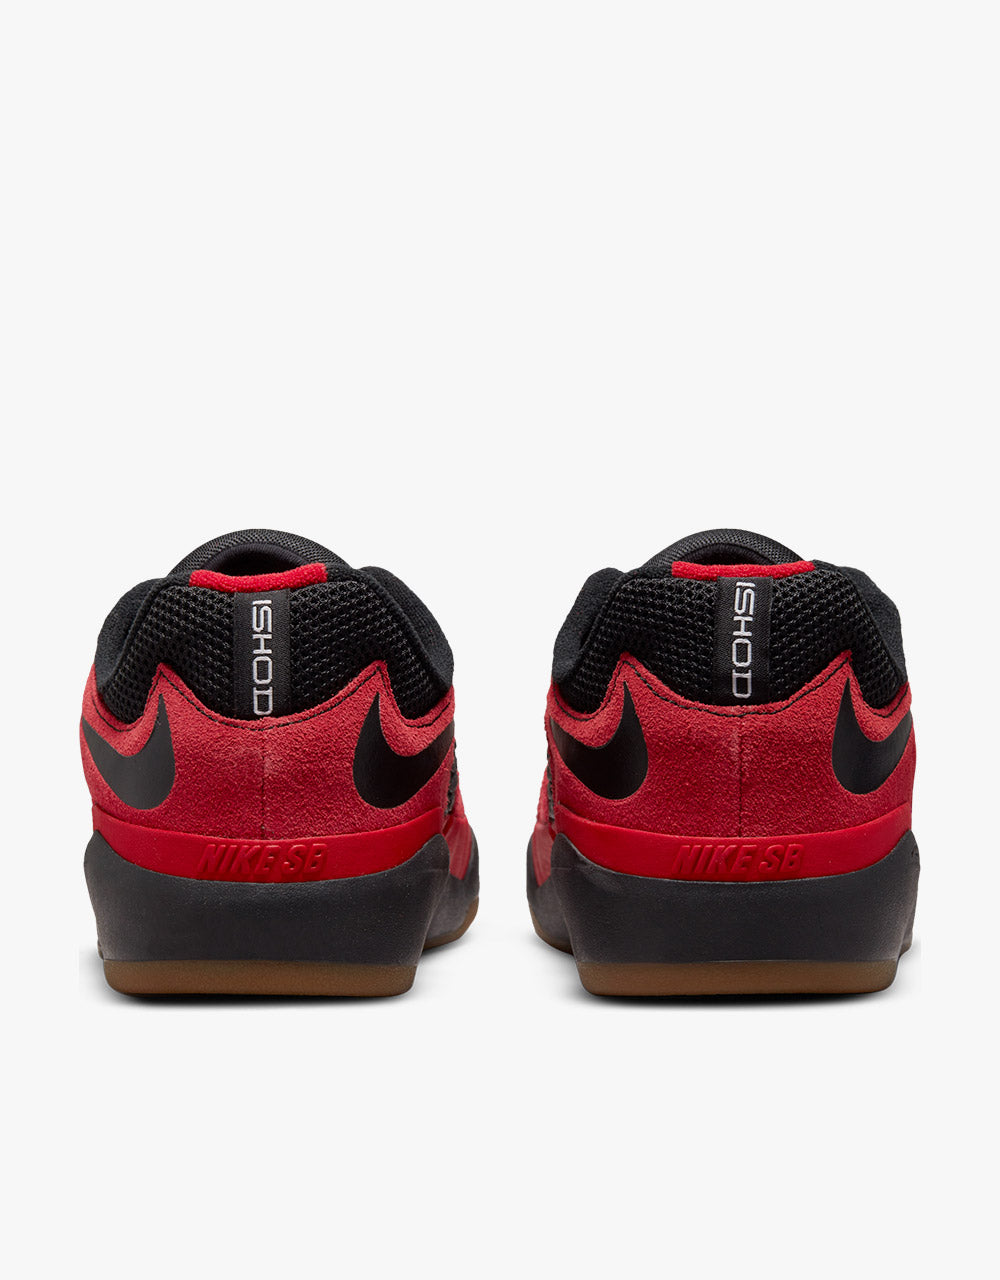 Nike SB Ishod Skate Shoes - Varsity Red/Black-Varsity Red-White